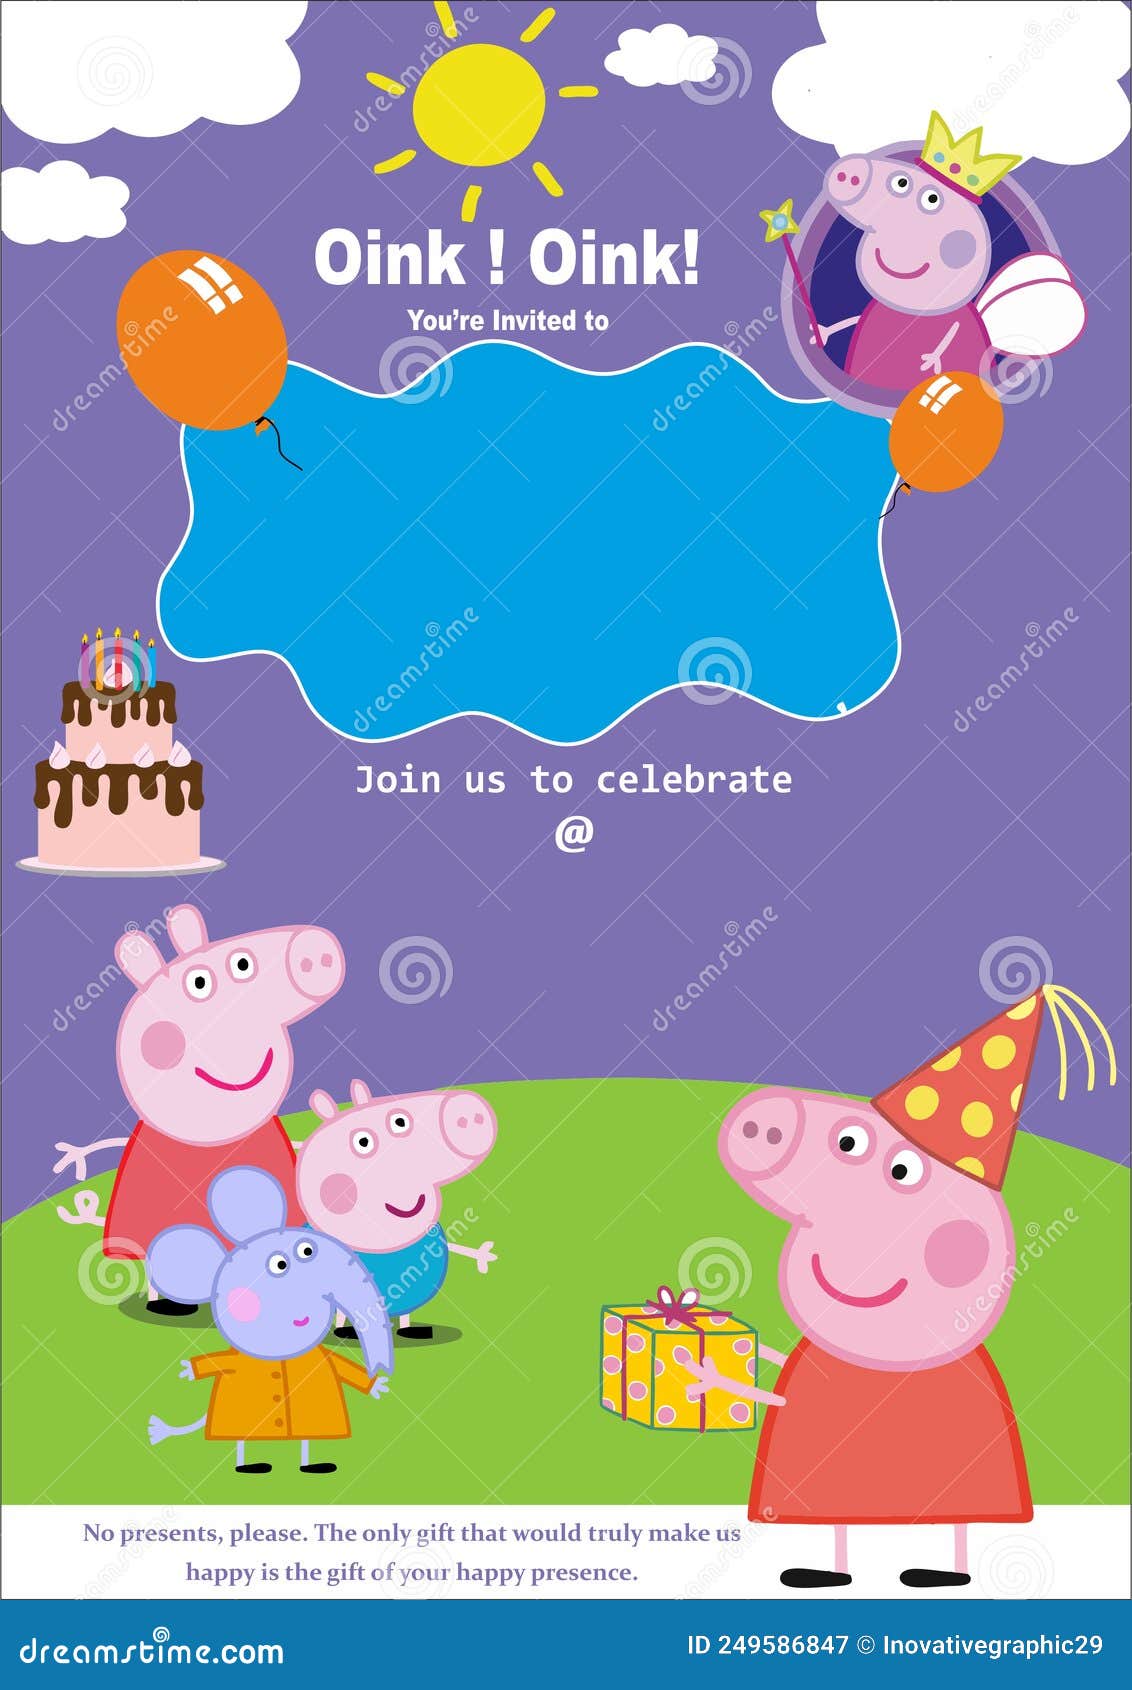 Carte d'invitation baptême ou anniversaire à gratter - Peppa pig